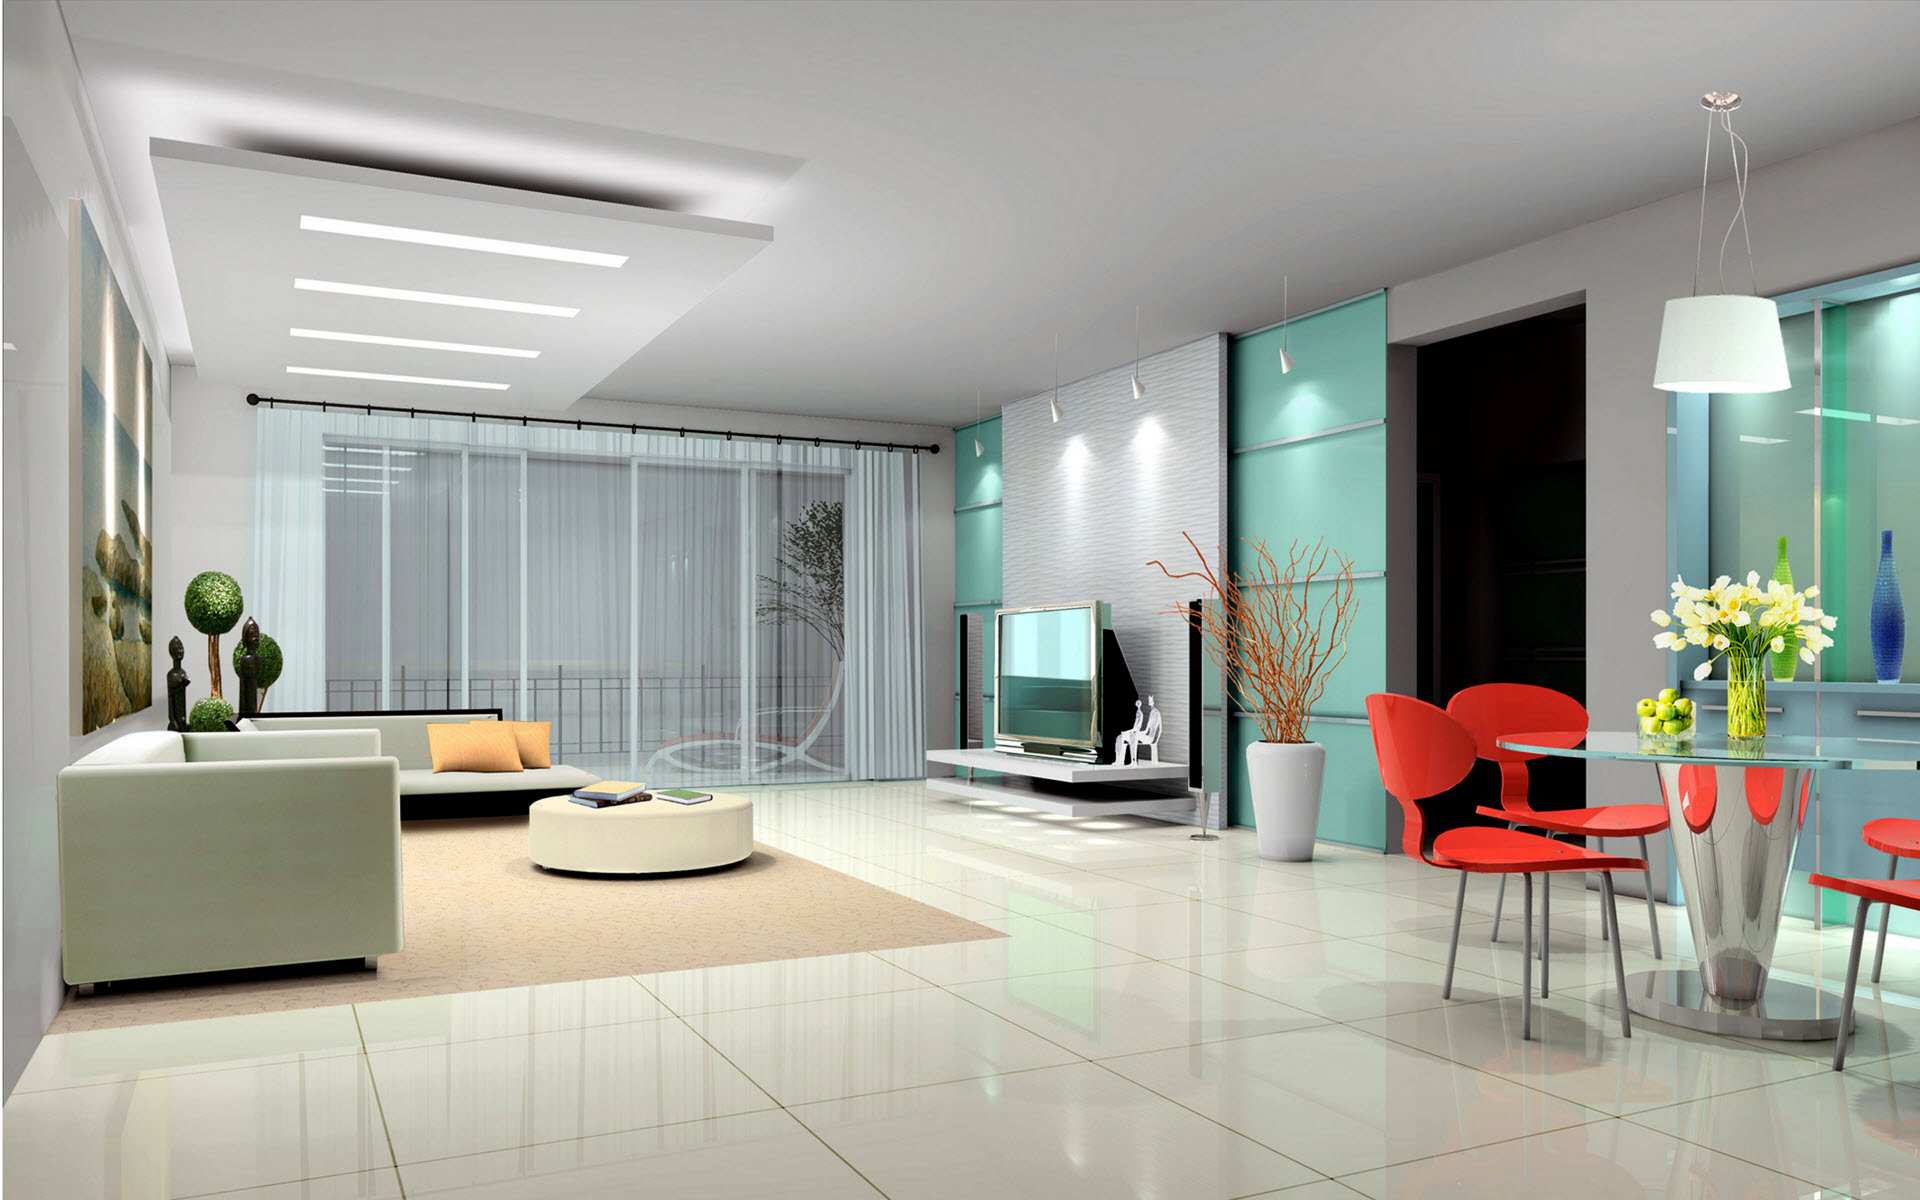 50 Best Interior Design For Your Home - Reverasite